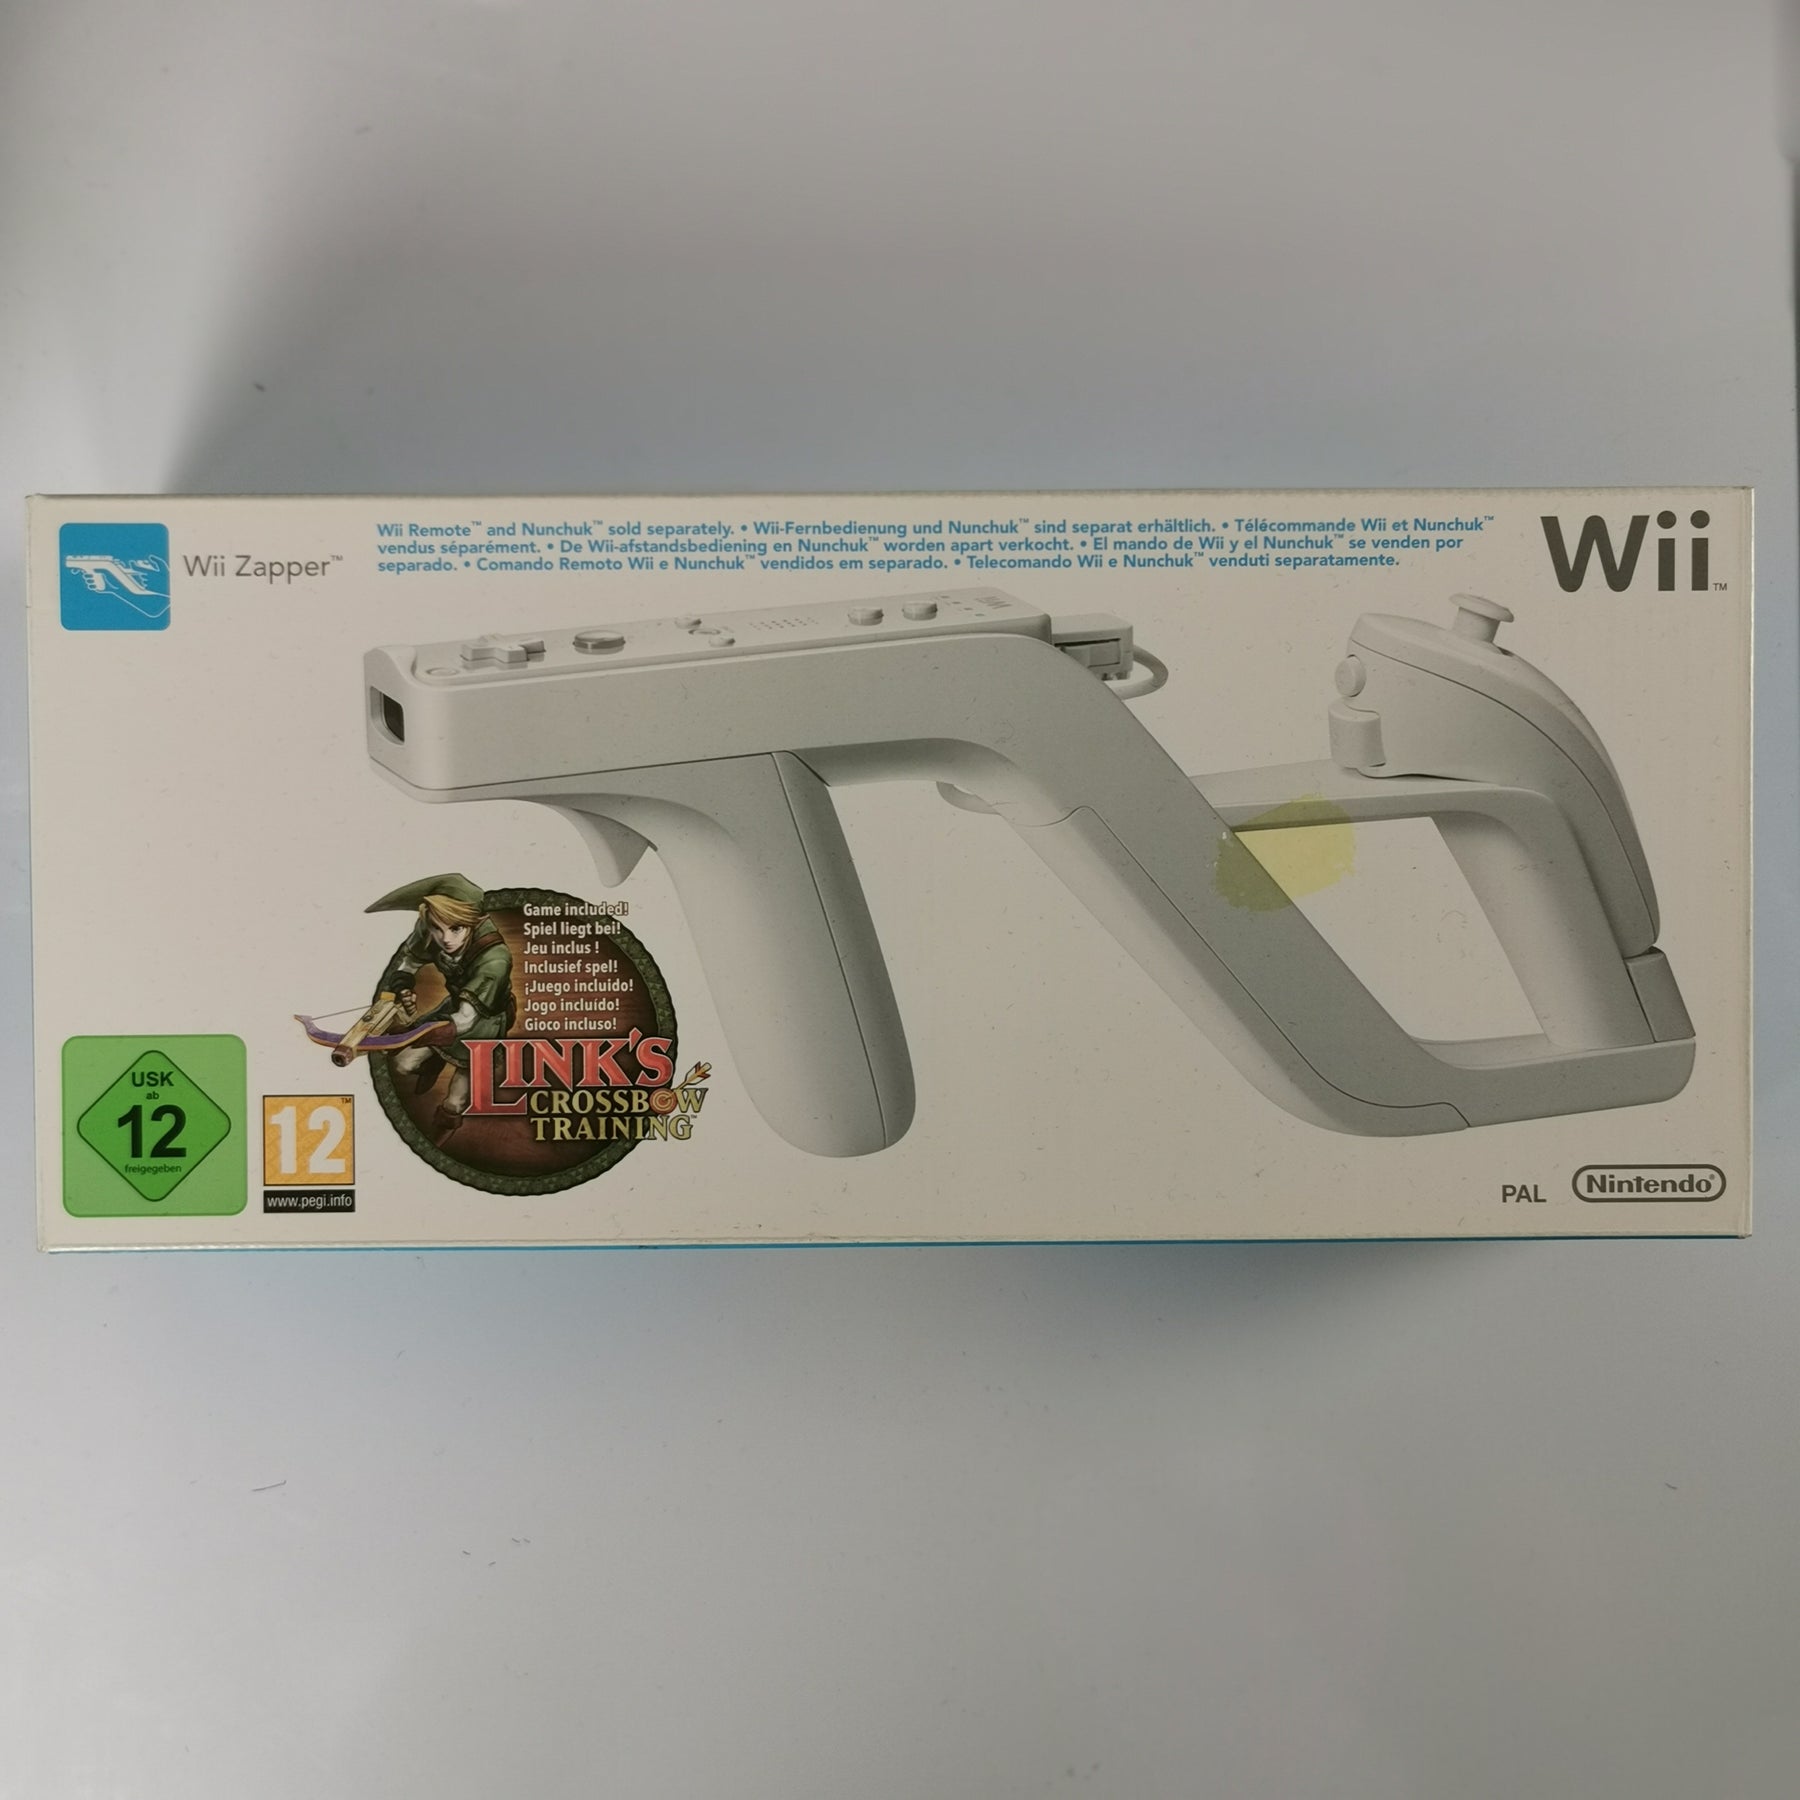 Links Crossbow Training m. Zapper [Wii]